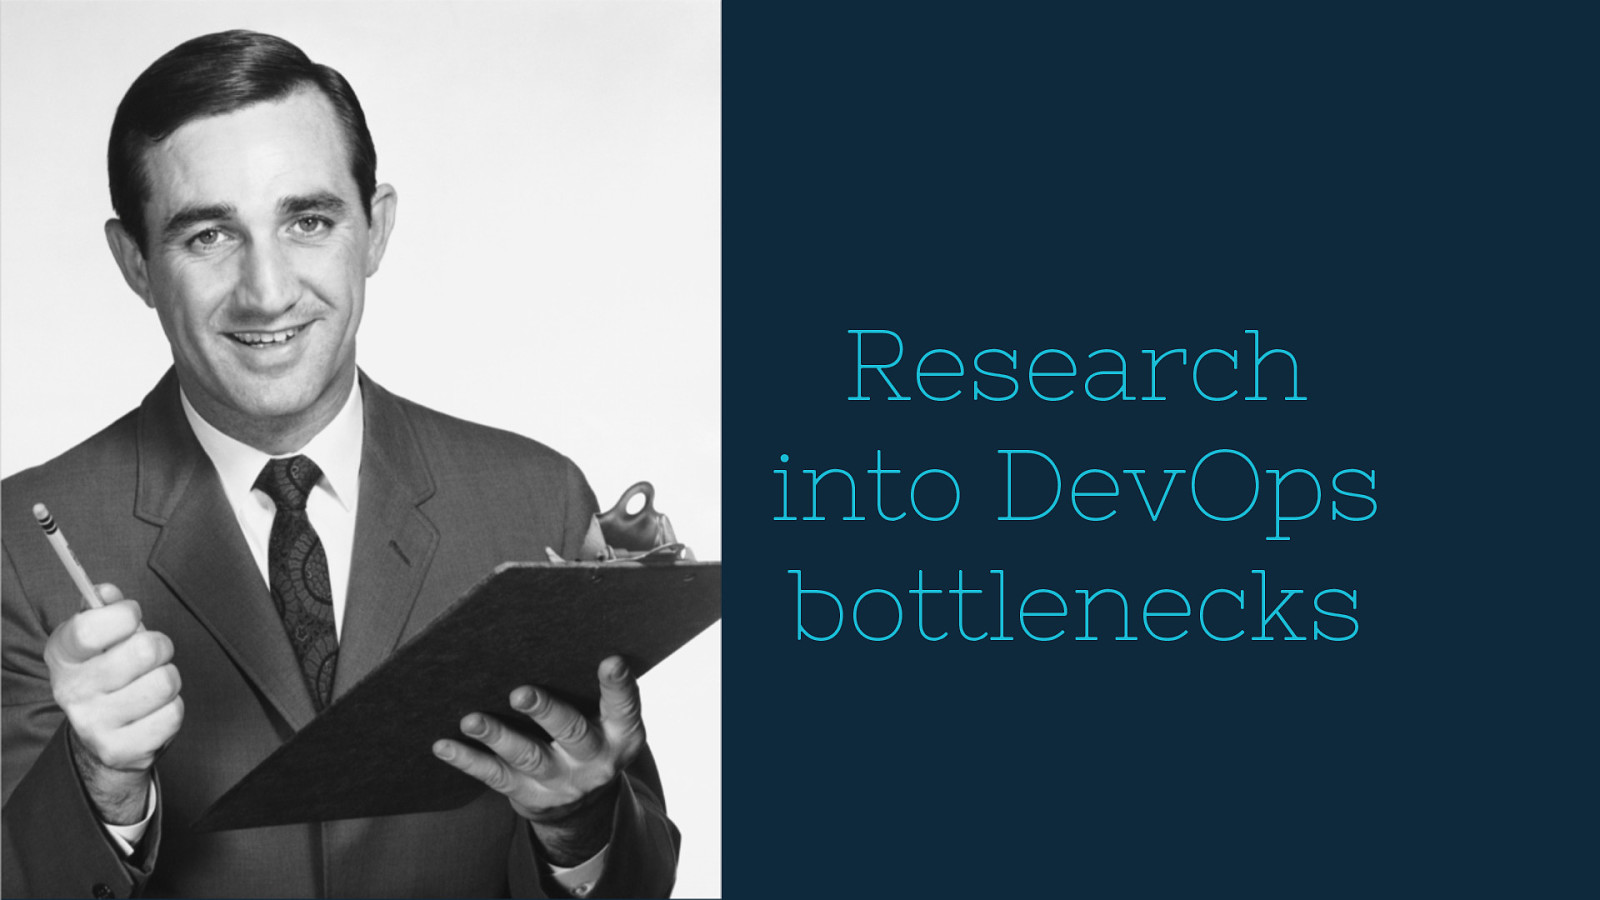  A Research Study into DevOps Bottlenecks